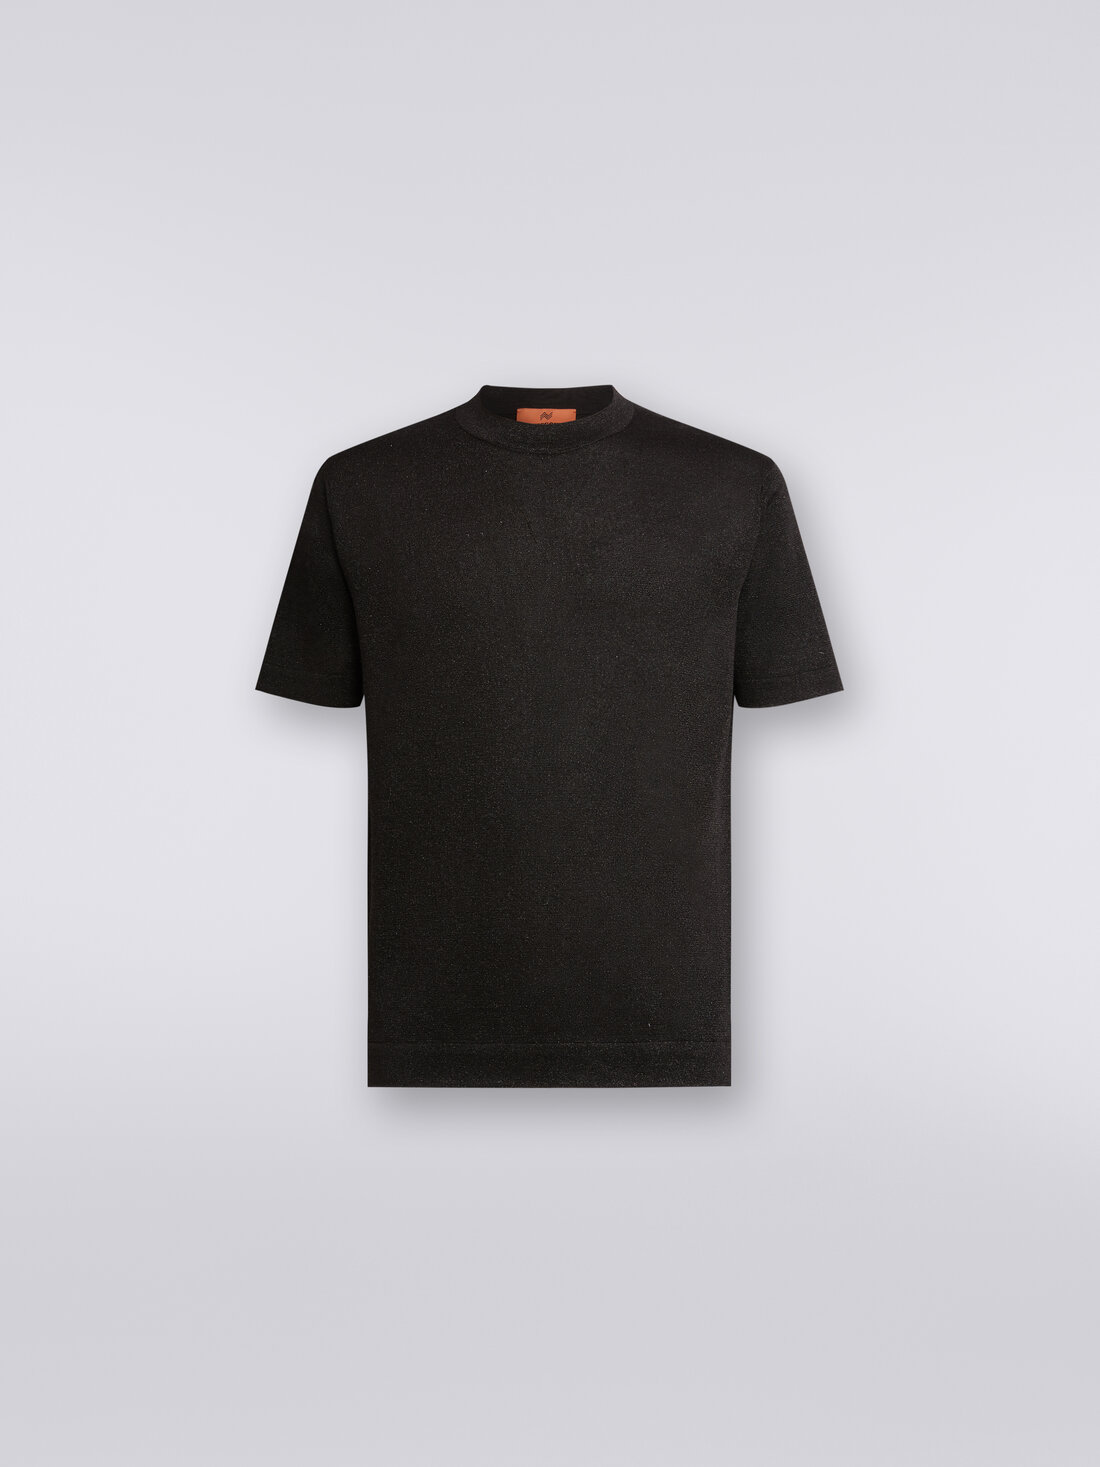 T-shirt in viscose blend with lurex, Black    - US24SL0EBK034PS91J5 - 0